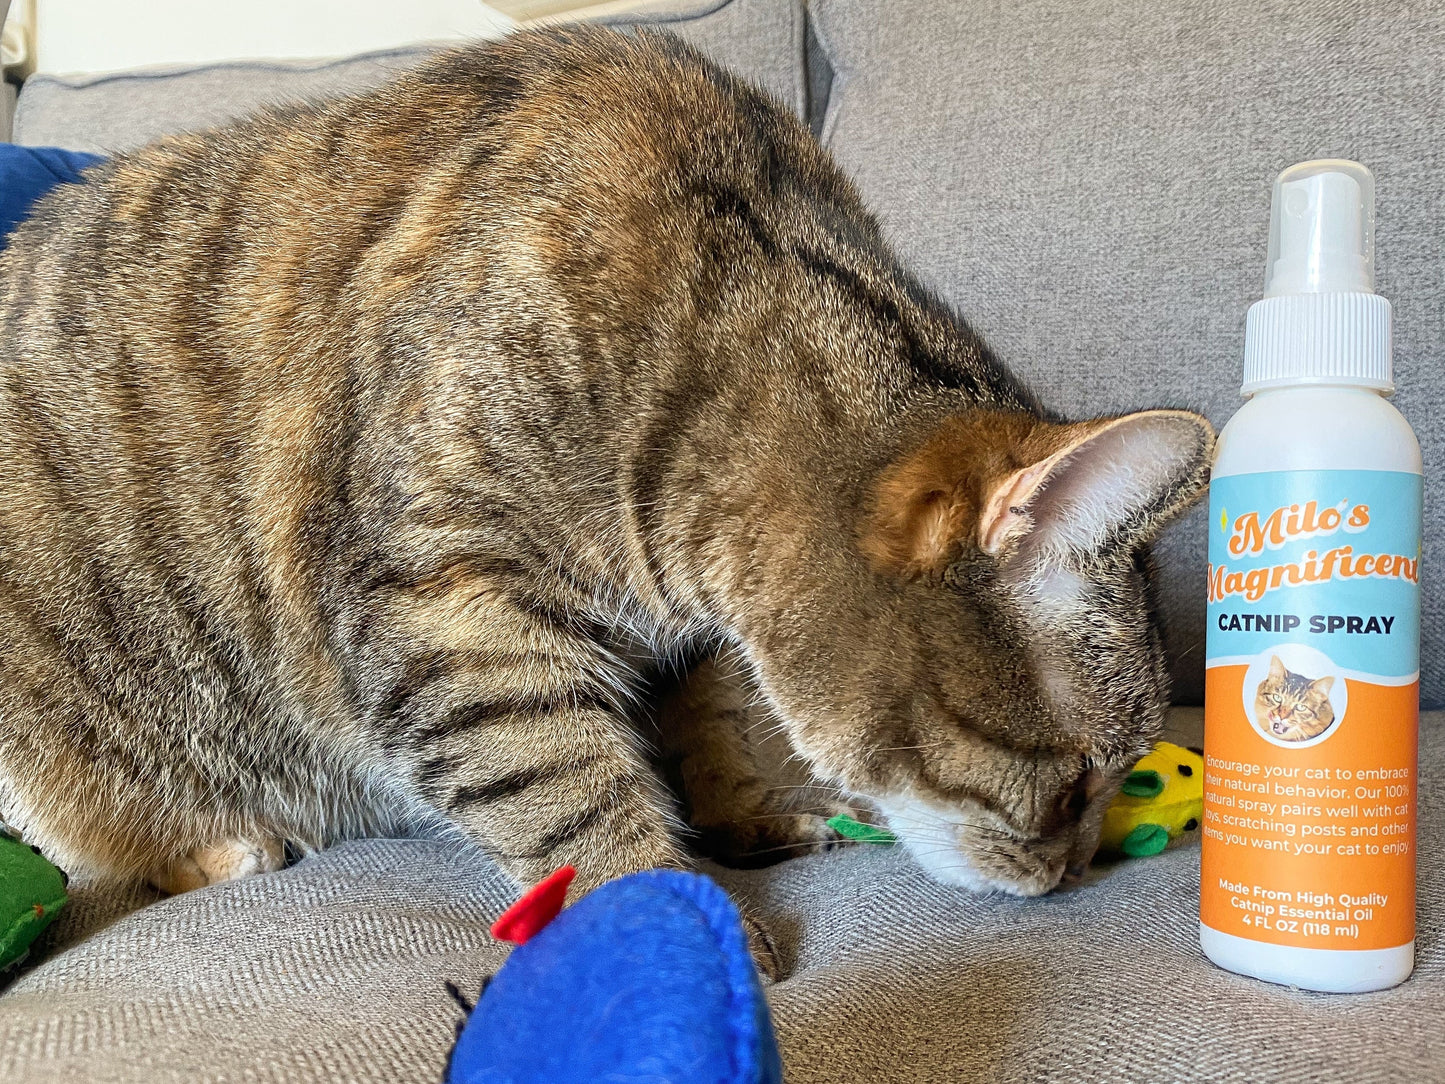 Copy of Milo's Magnificent Catnip Spray (4 oz.) 3 Pack